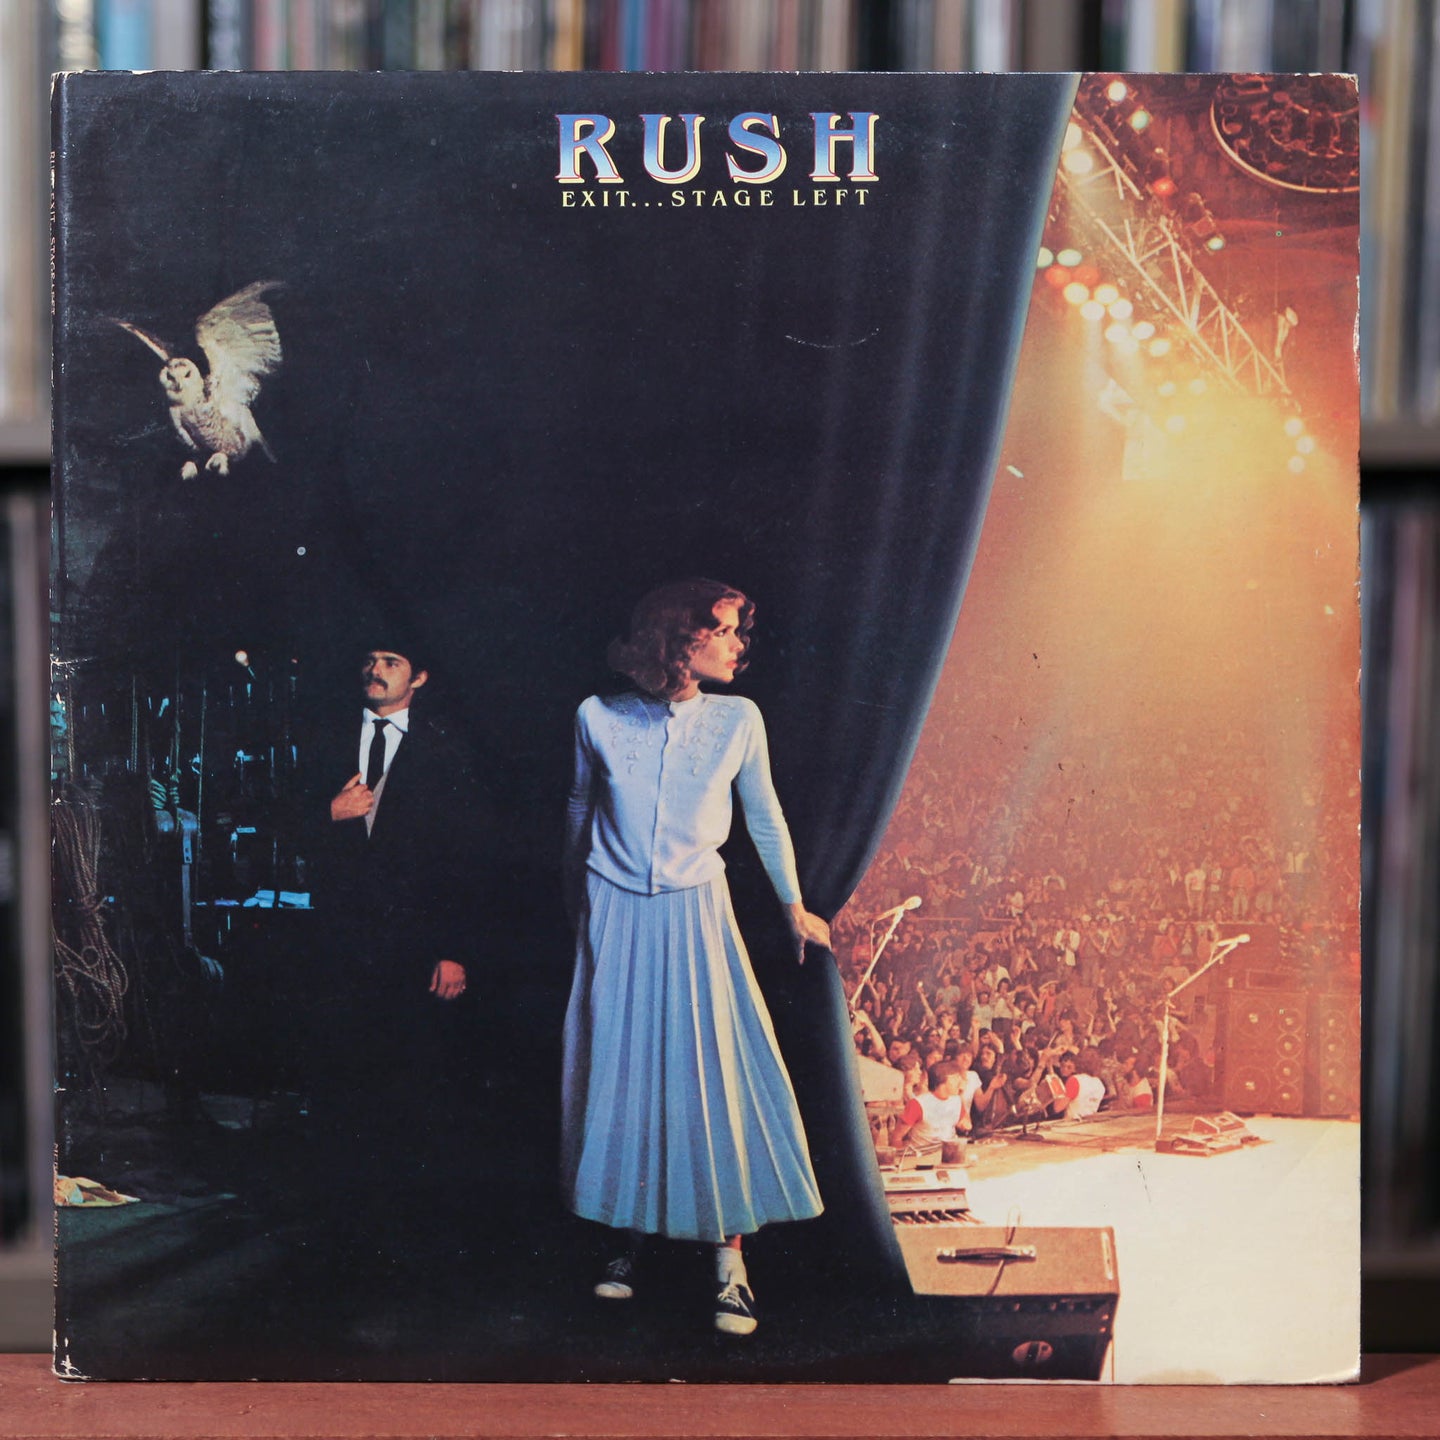 Rush - Exit...Stage Left - 2LP - 1981 Mercury, VG/VG